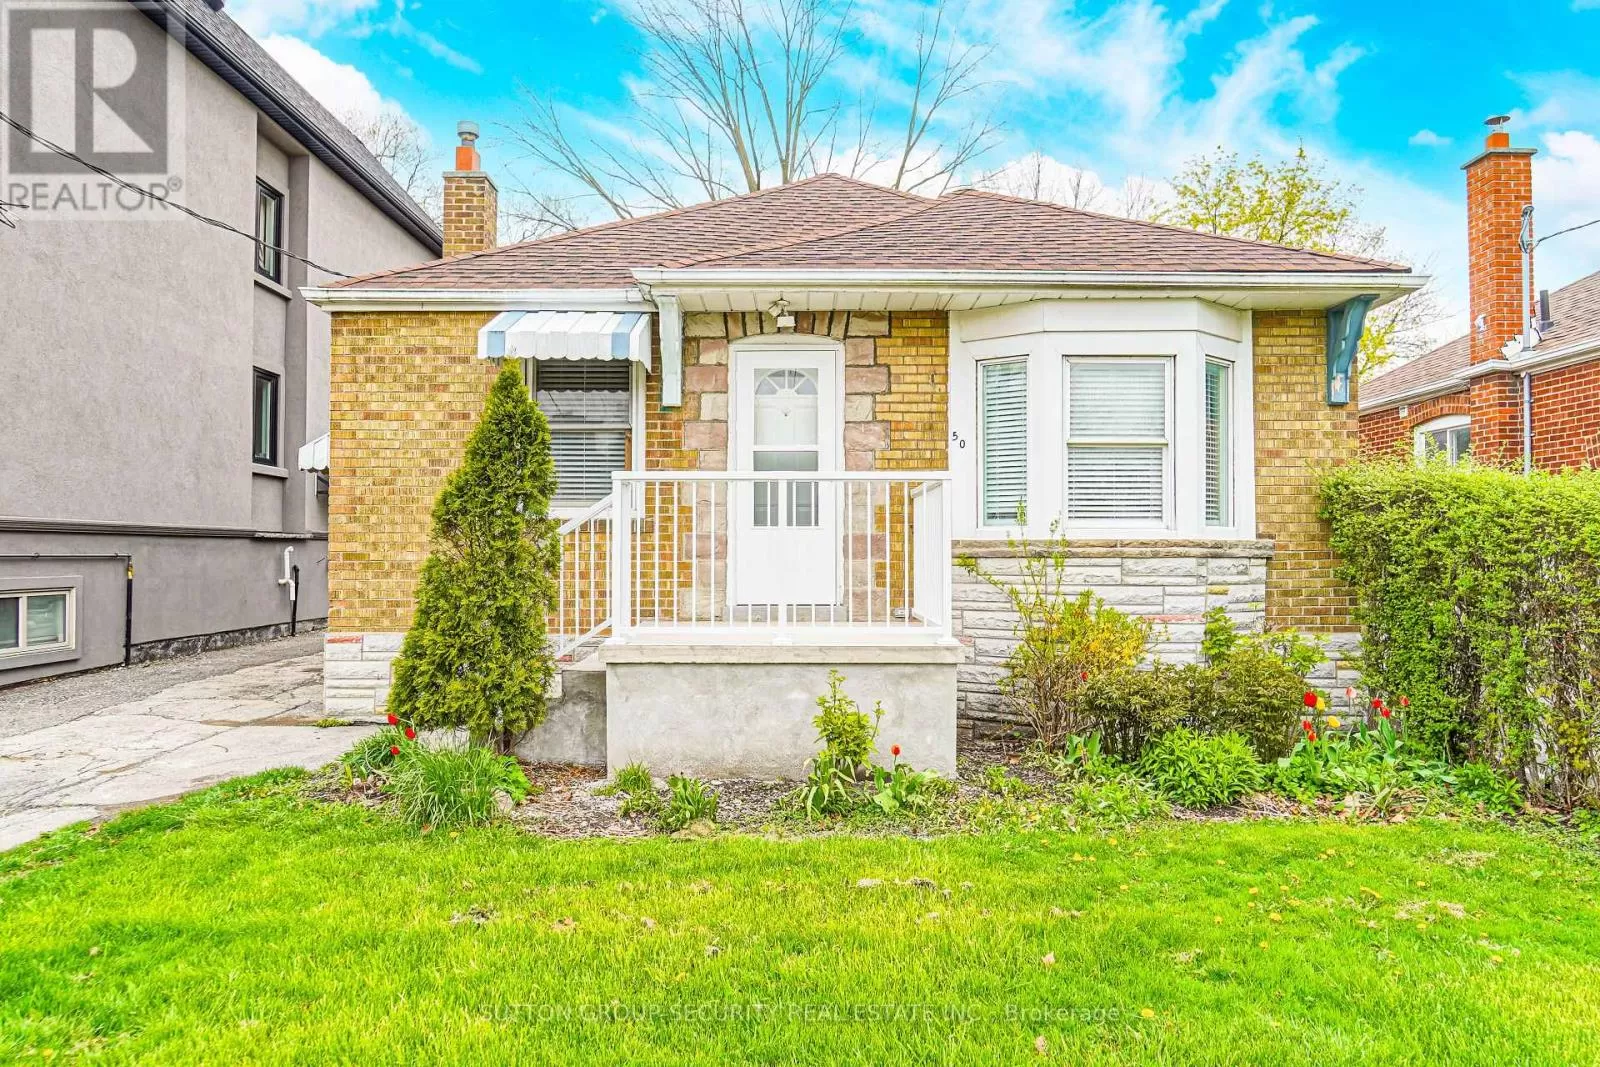 House for rent: 50 William Street, Toronto, Ontario M9N 2G7